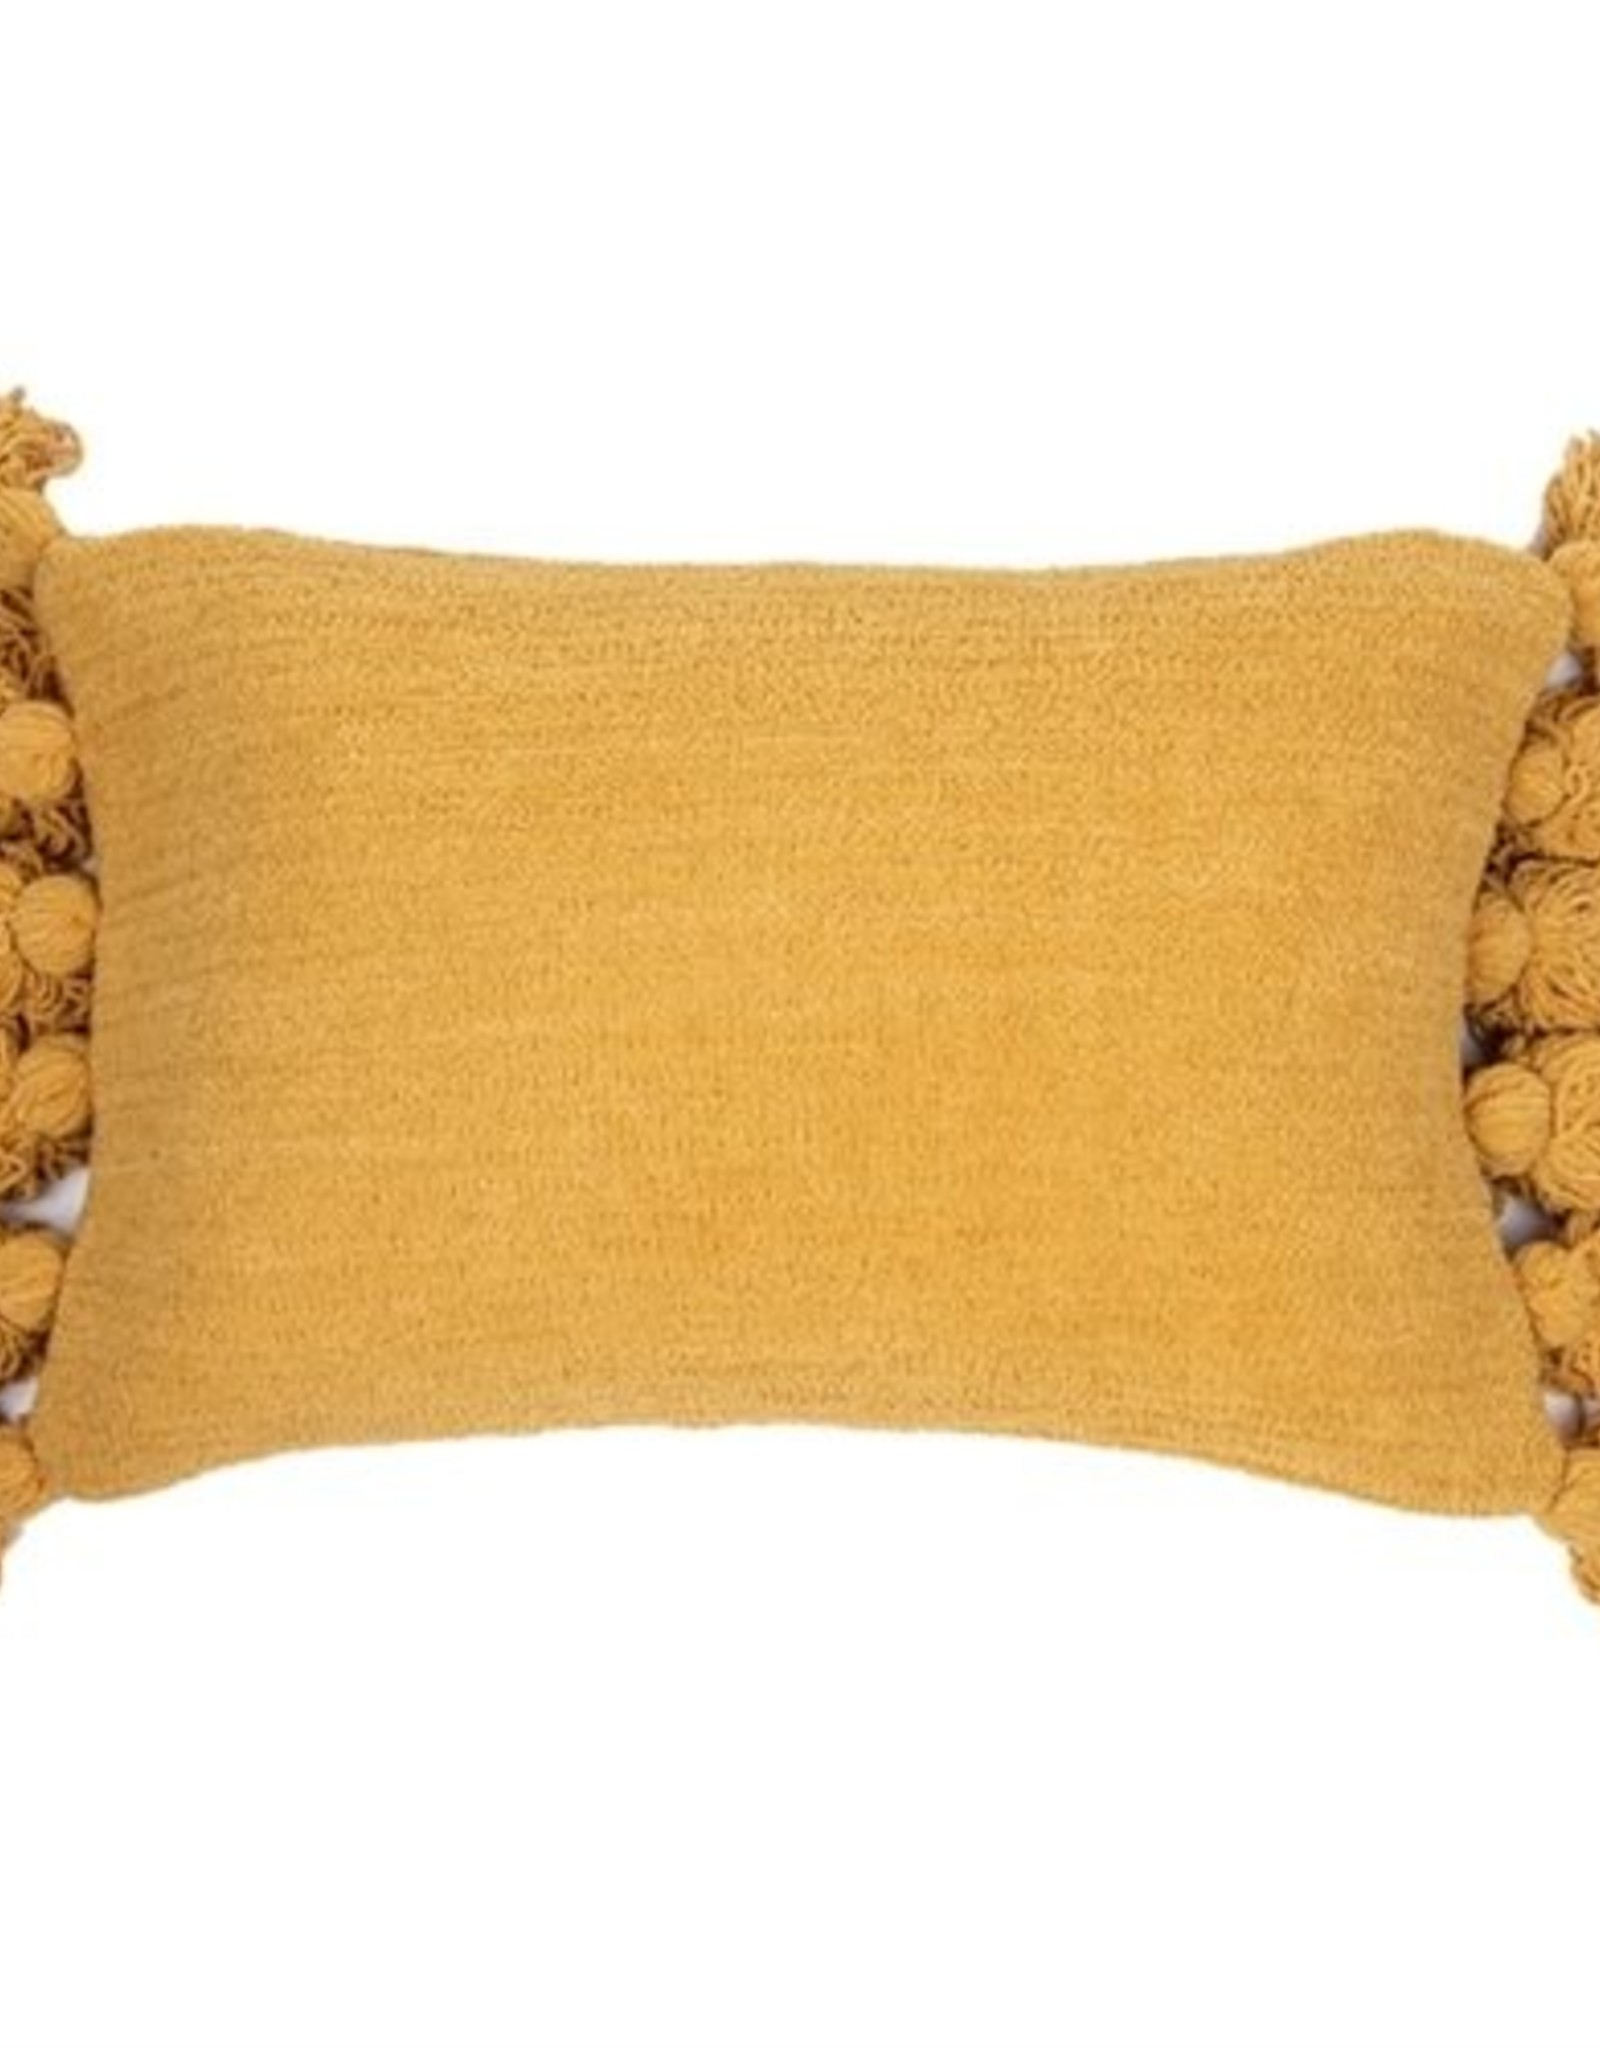 Cushions Brunelli Paddington Oblong Mustard Chenille   16 x 24   110M123